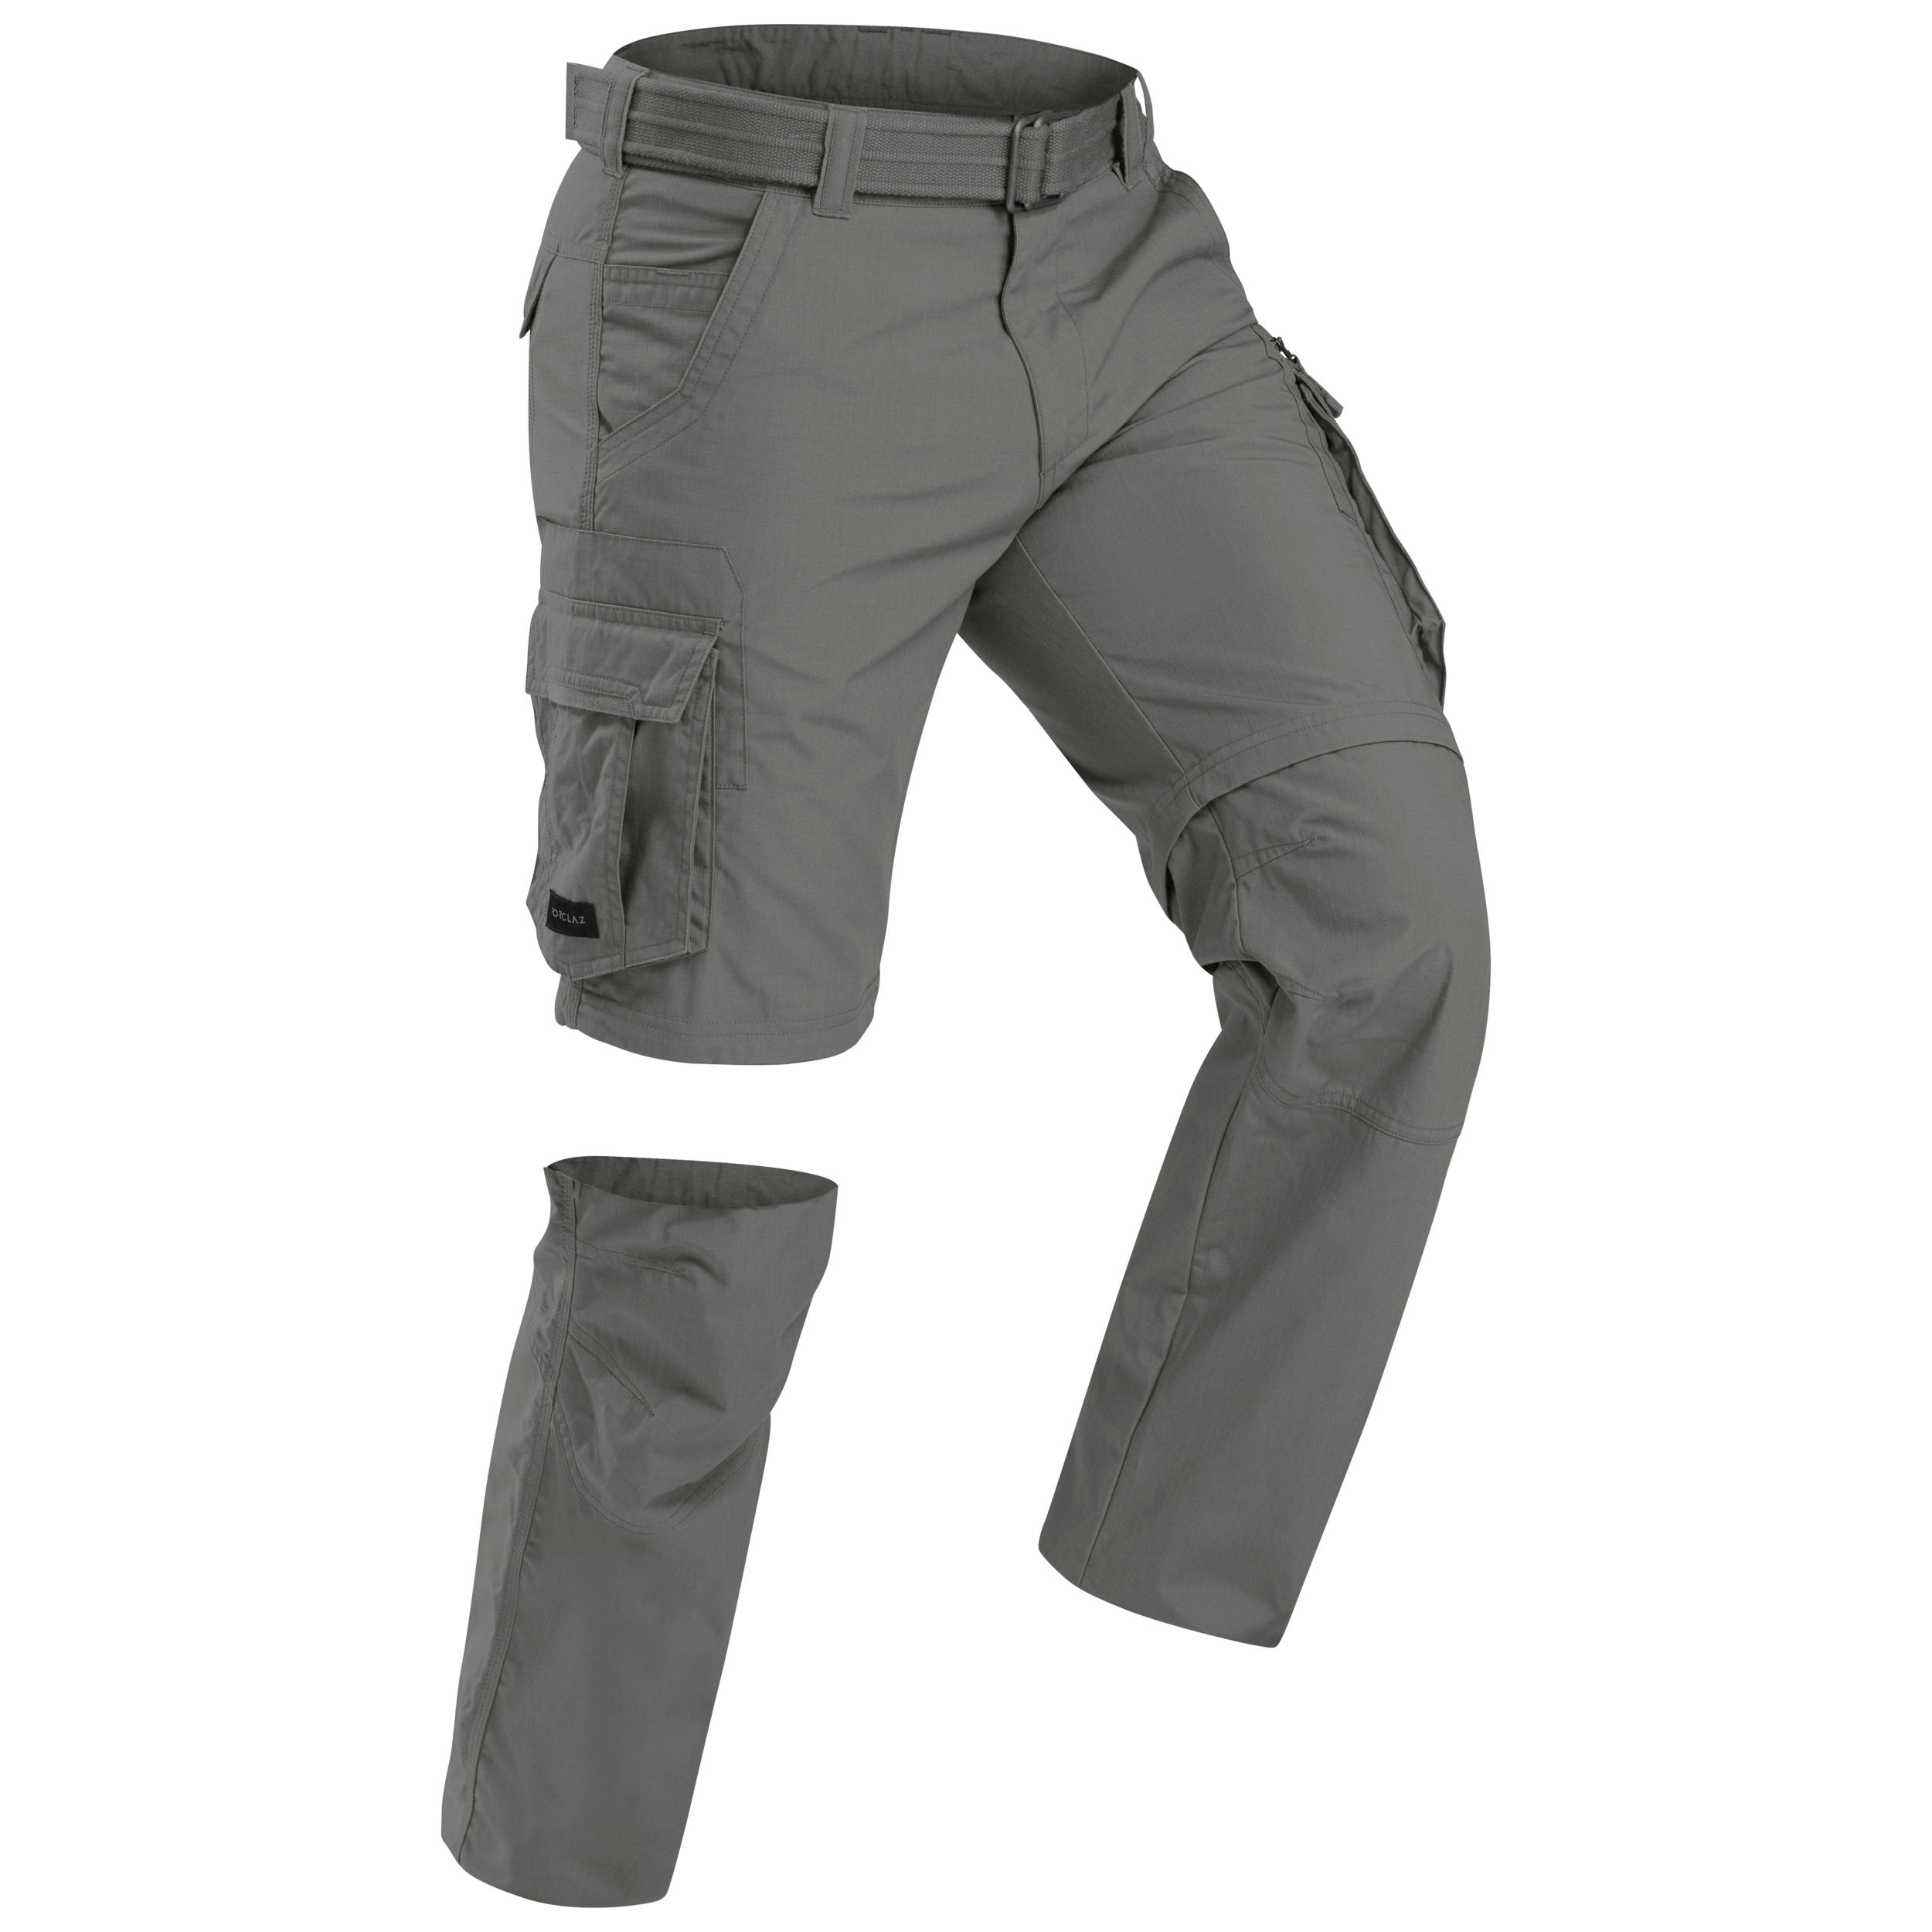 QUECHUA by Decathlon Regular Fit Men Grey Trousers - Buy QUECHUA by  Decathlon Regular Fit Men Grey Trousers Online at Best Prices in India |  Flipkart.com